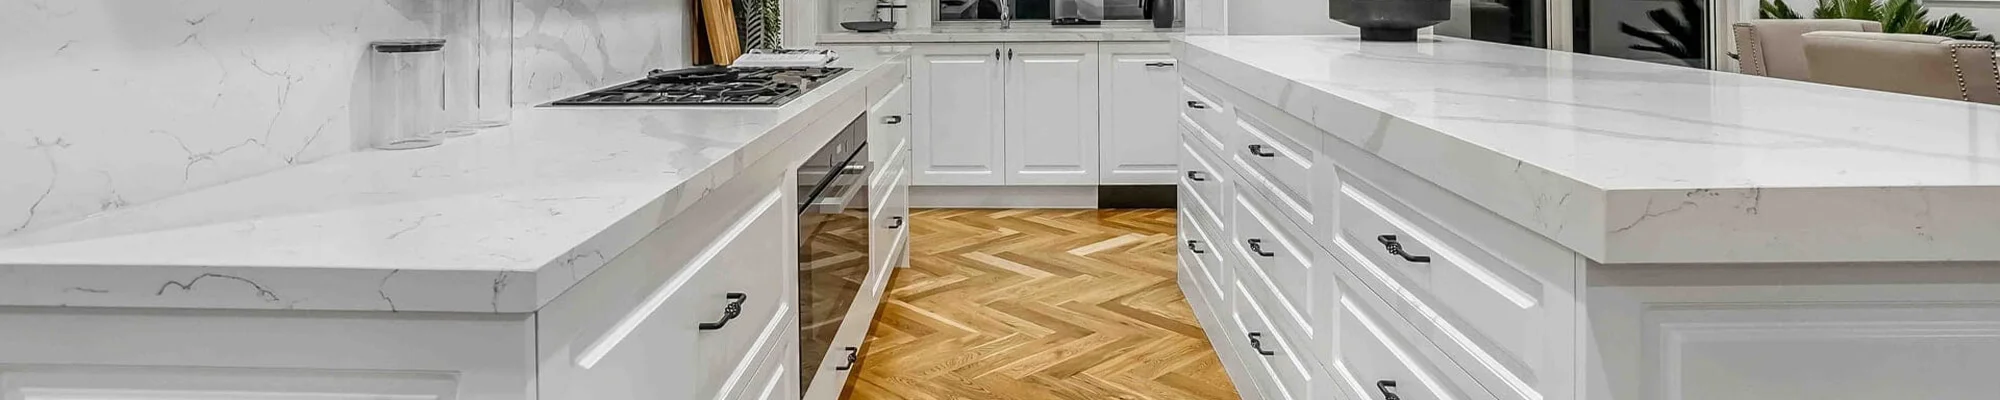 White cabinet kitchen with hardwood flooring